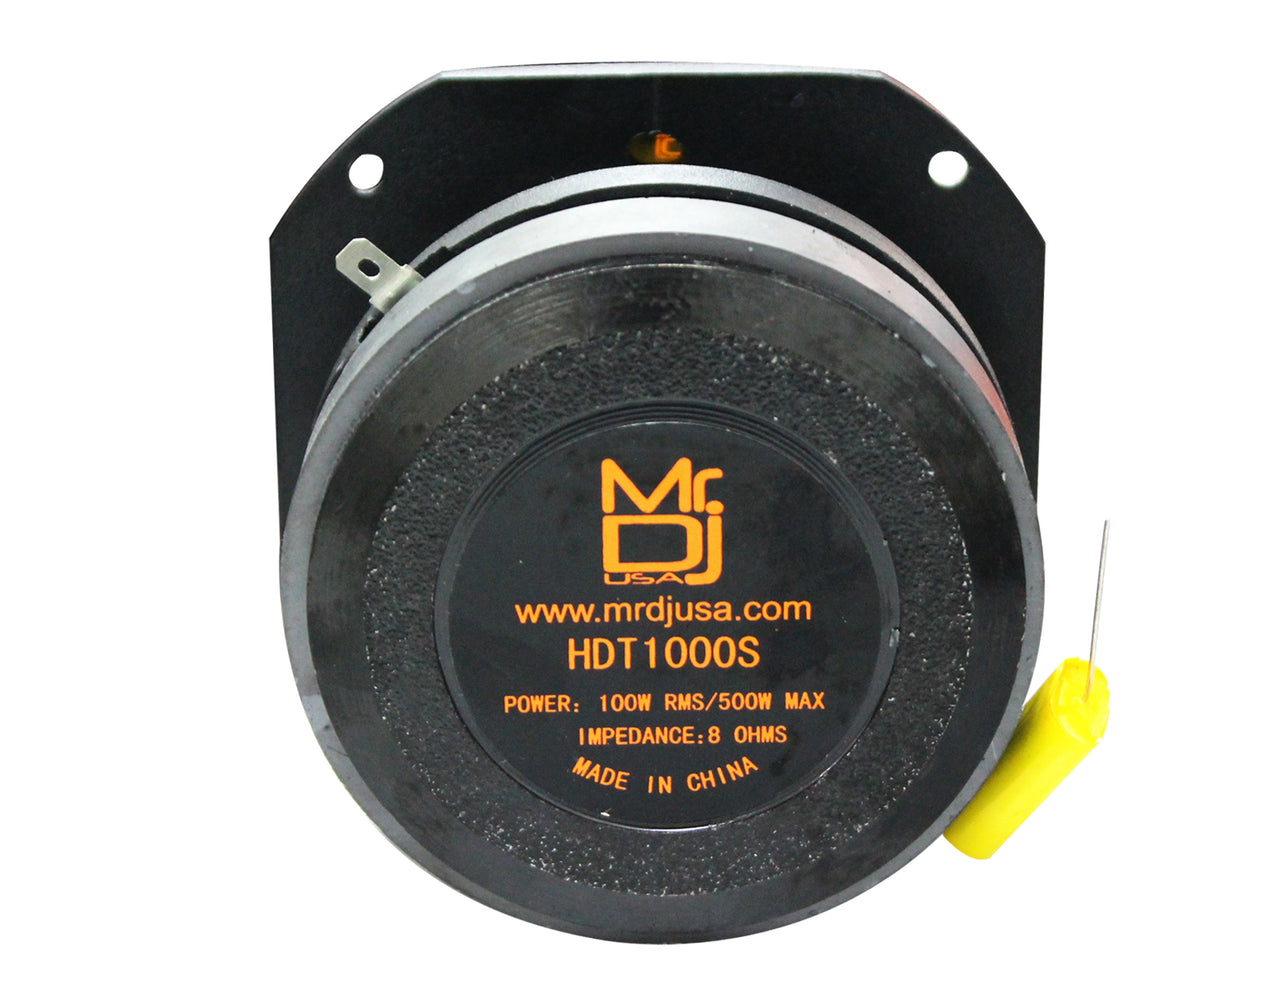 2 MR DJ HDT1000S 4-Inch Titanium Horn Bullet High Compression Tweeter for Car, Van, ATV, UTV, Marine, Boat, Motorcycle, Motorsports, and Competition